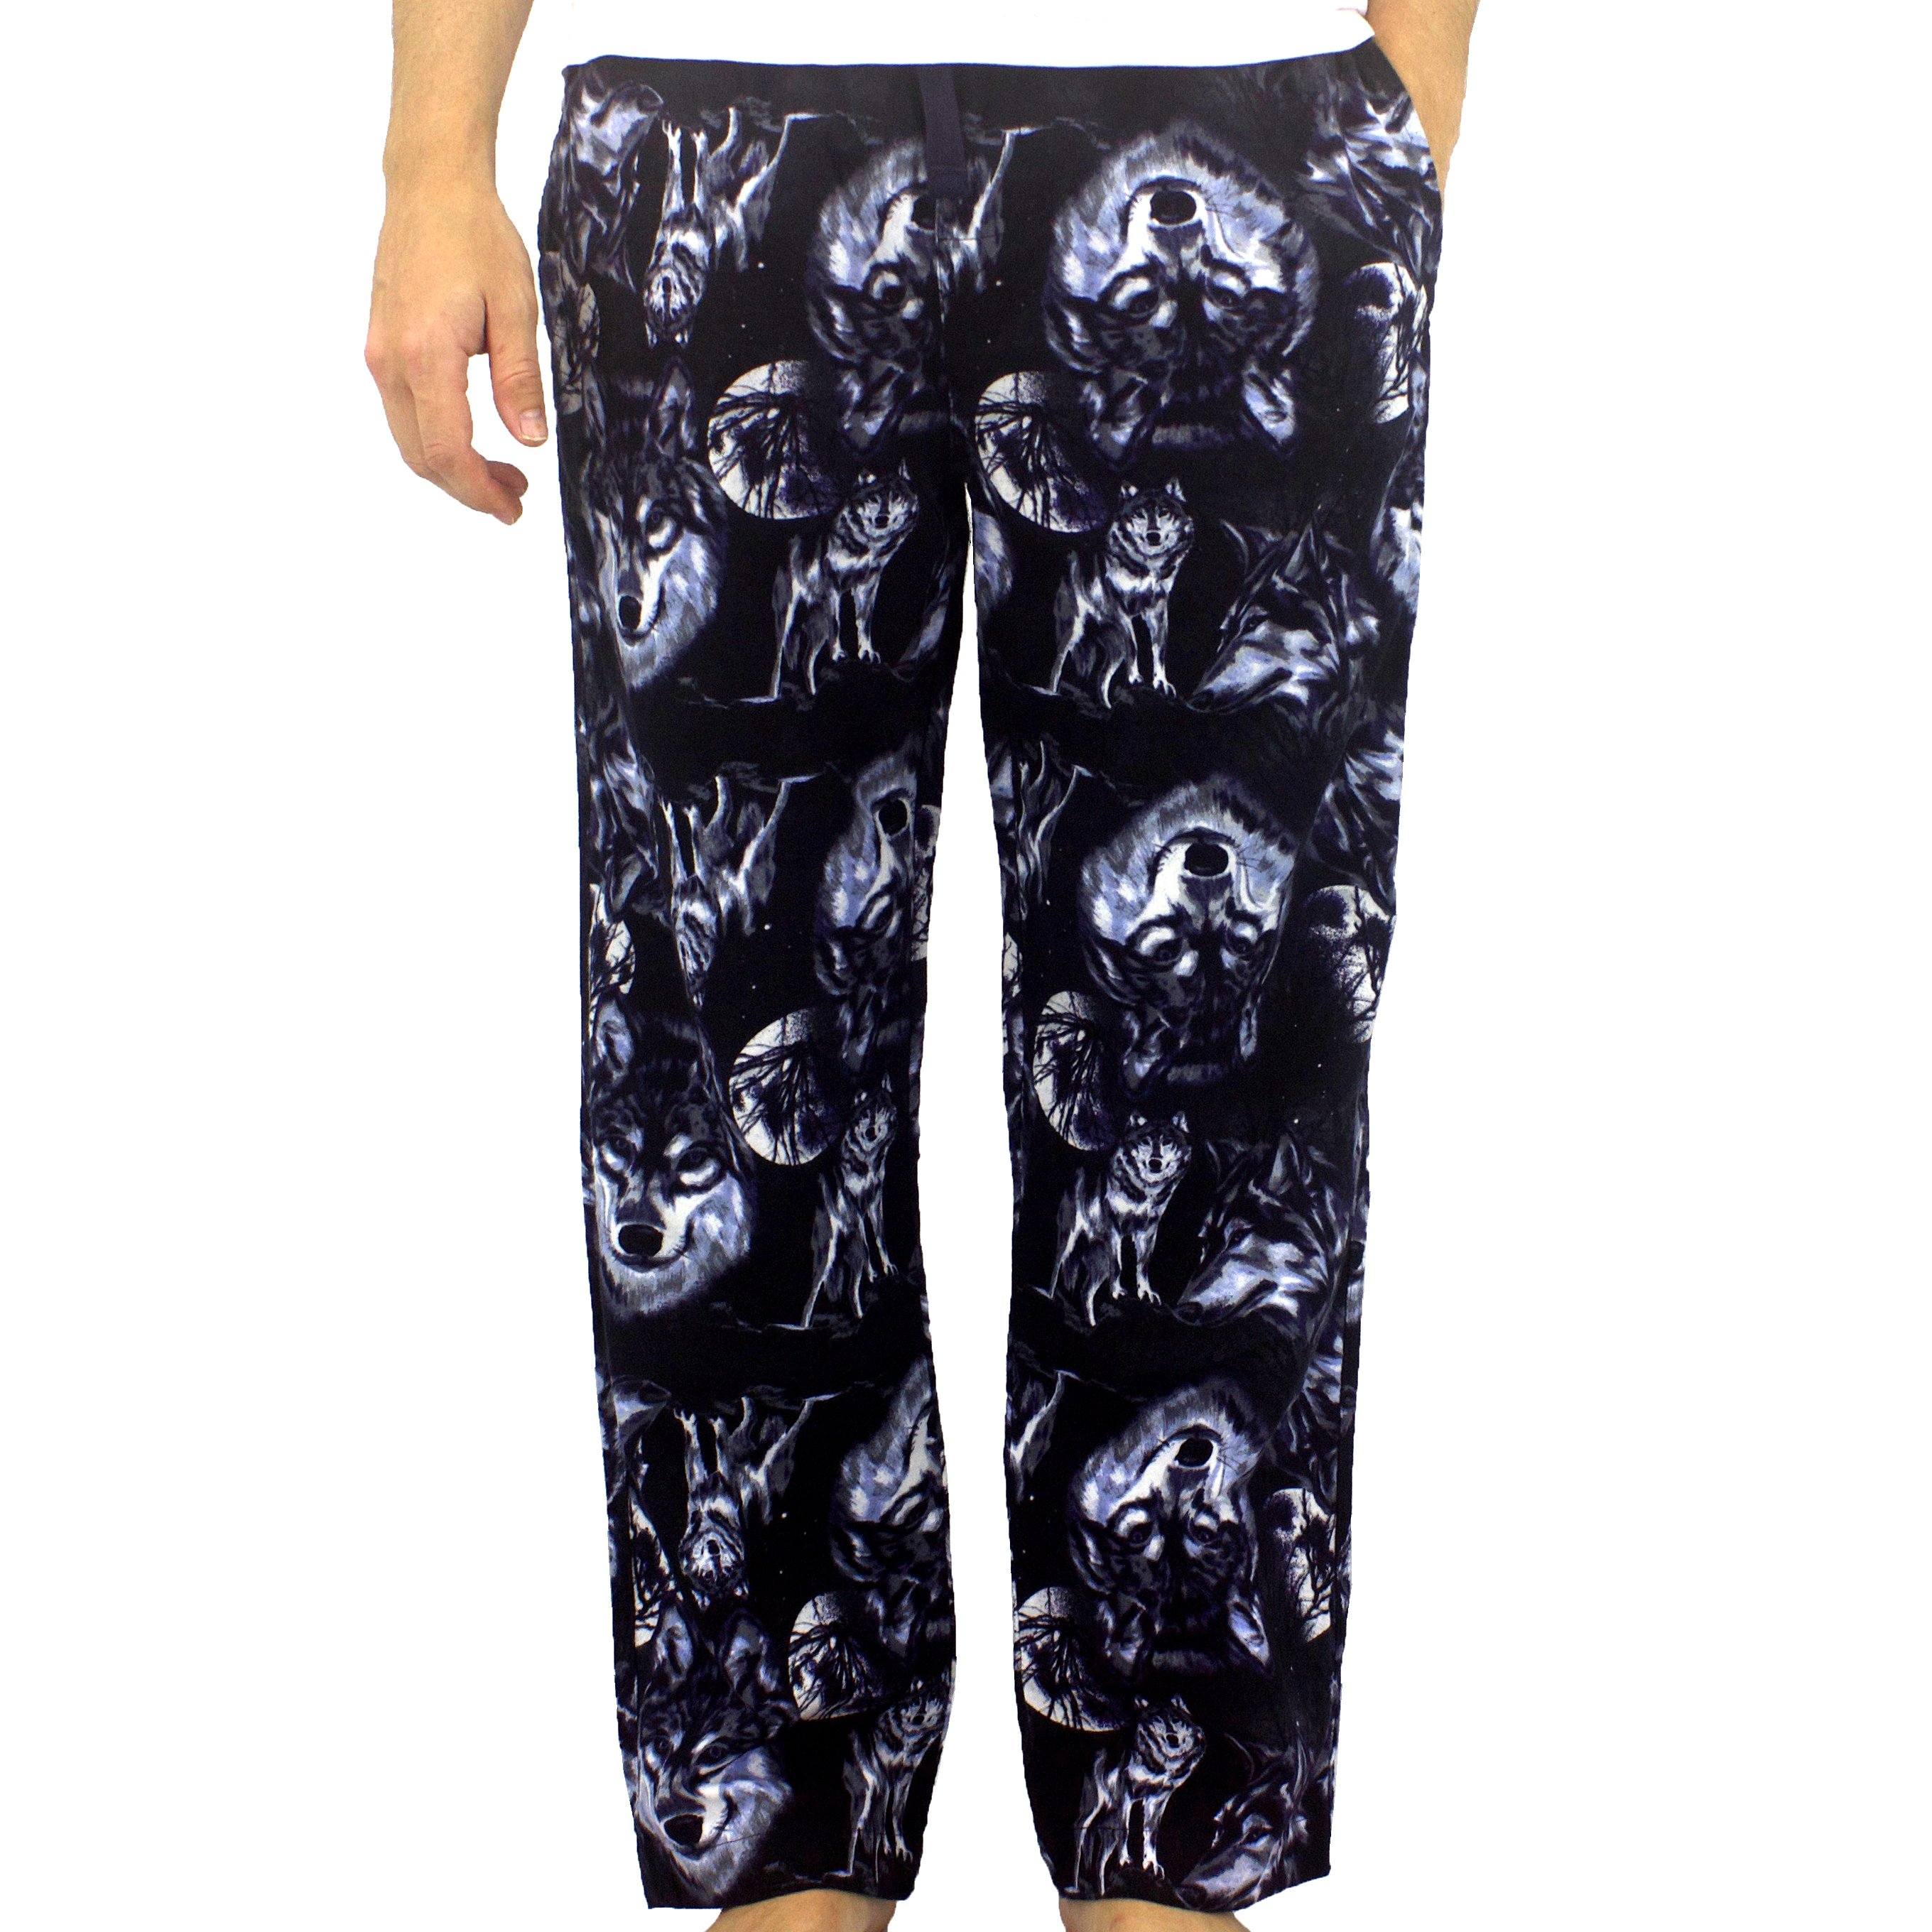 Cute Black Cats Pajama Pants Mens Lounge Pants Super Soft Men Pajama Bottoms  with Drawstring & Pockets Size S at Amazon Men's Clothing store